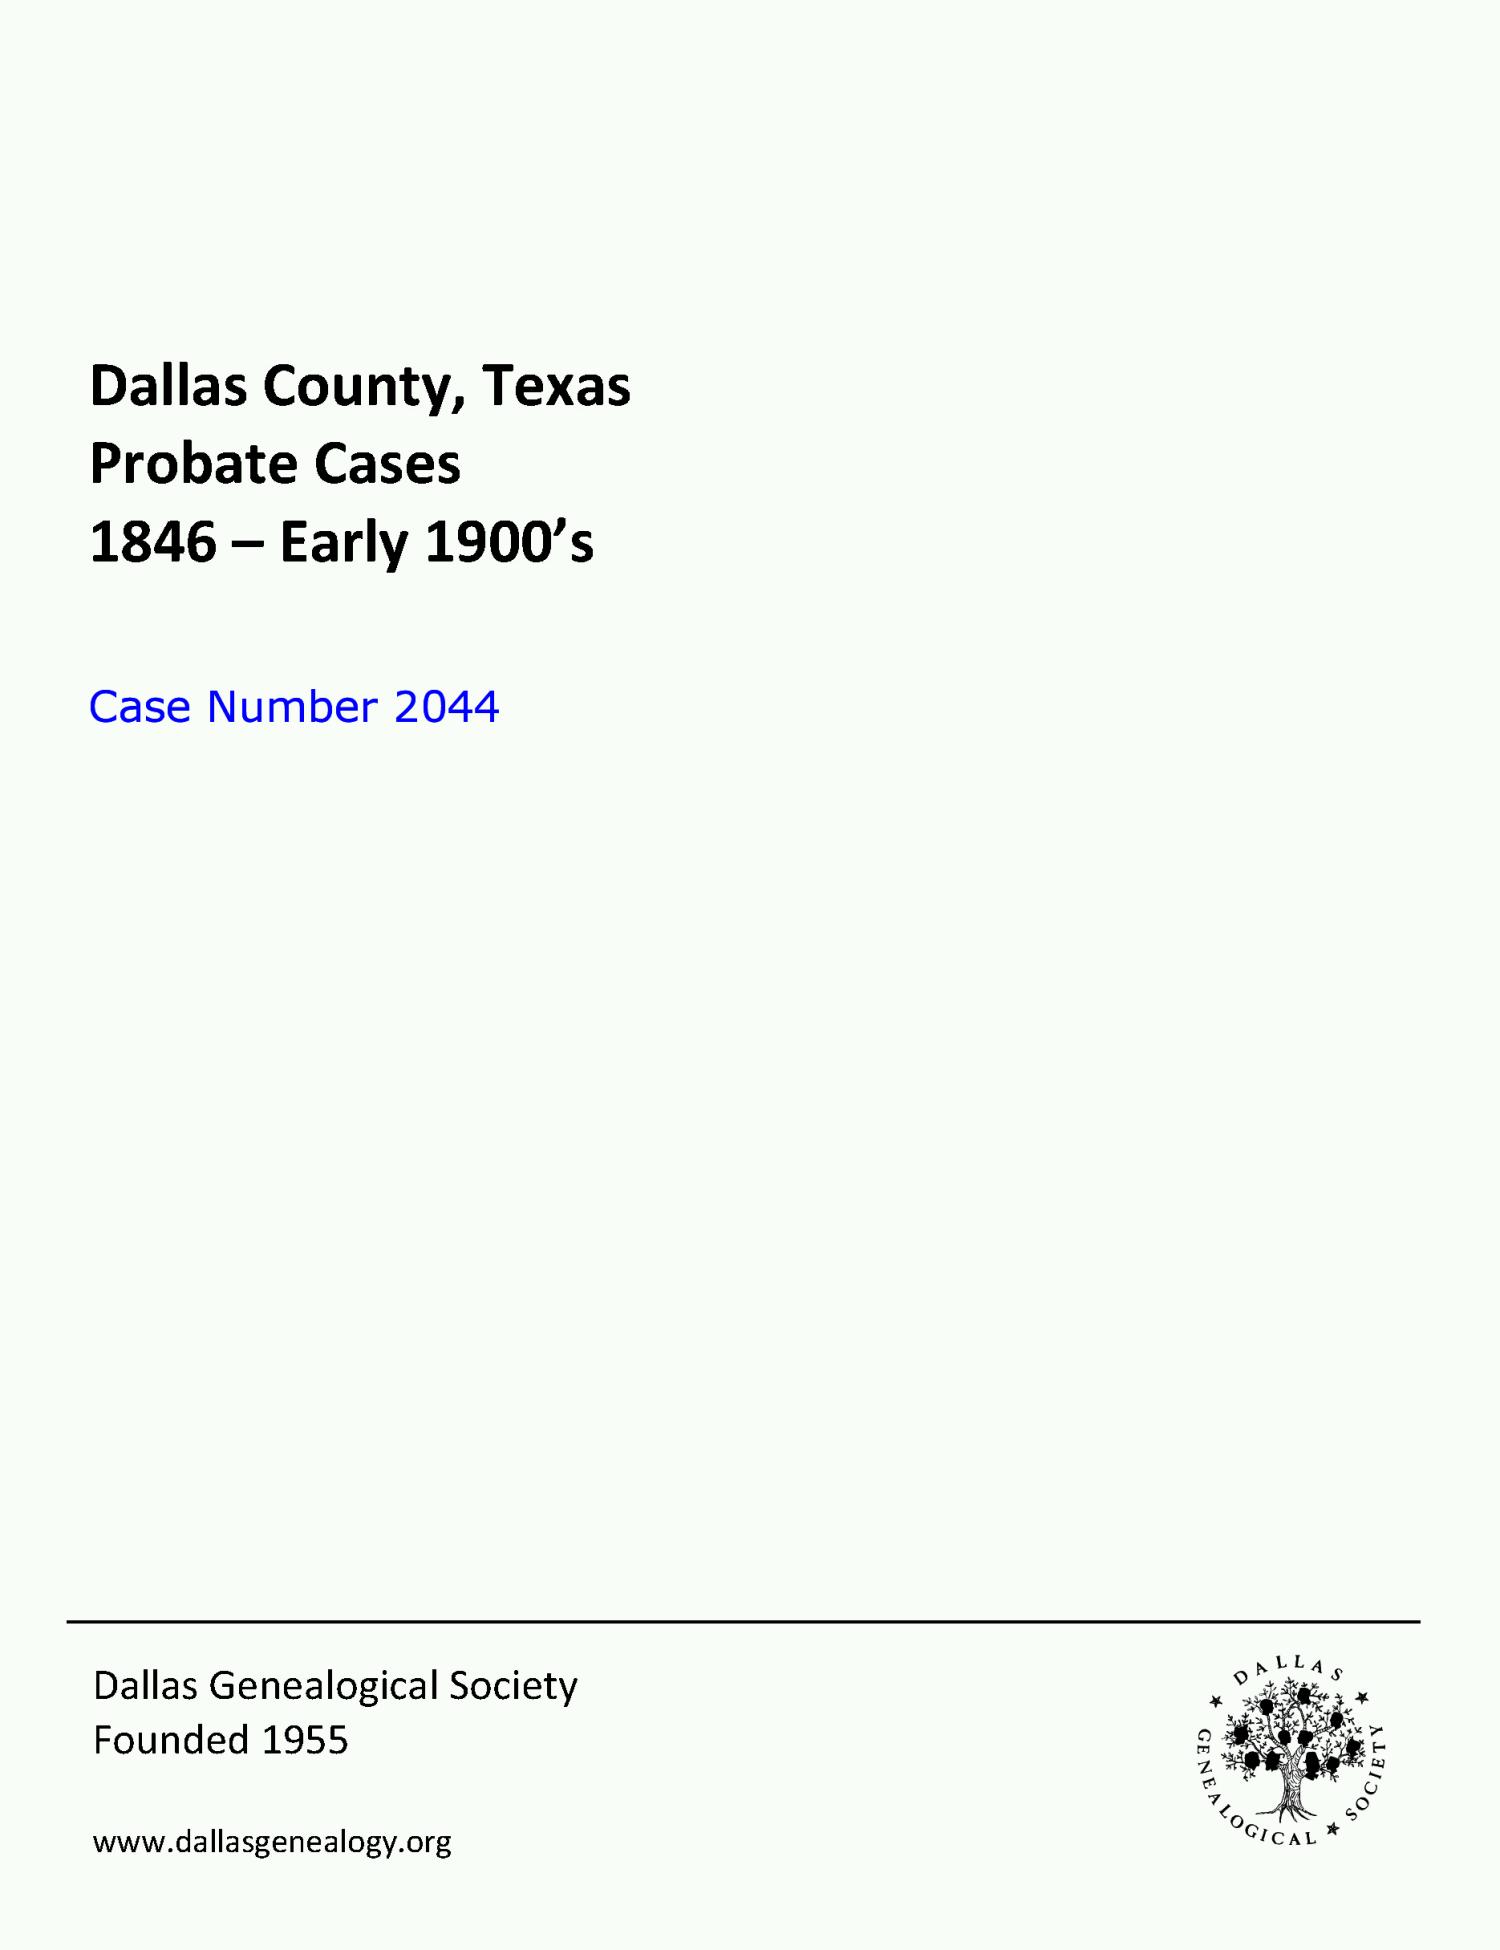 Dallas County Probate Case 2044: Webb, David et al (Minors)
                                                
                                                    [Sequence #]: 1 of 27
                                                